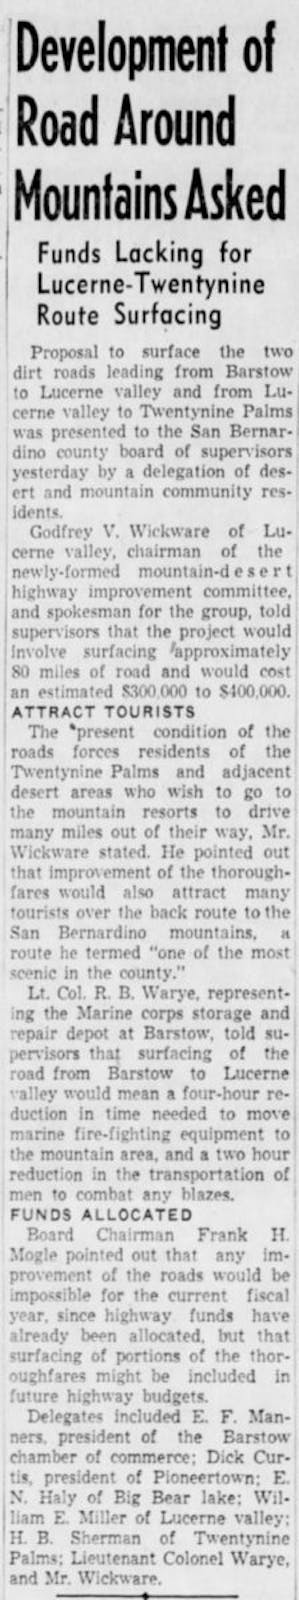 Oct. 15, 1947 - The San Bernardino County Sun article clipping